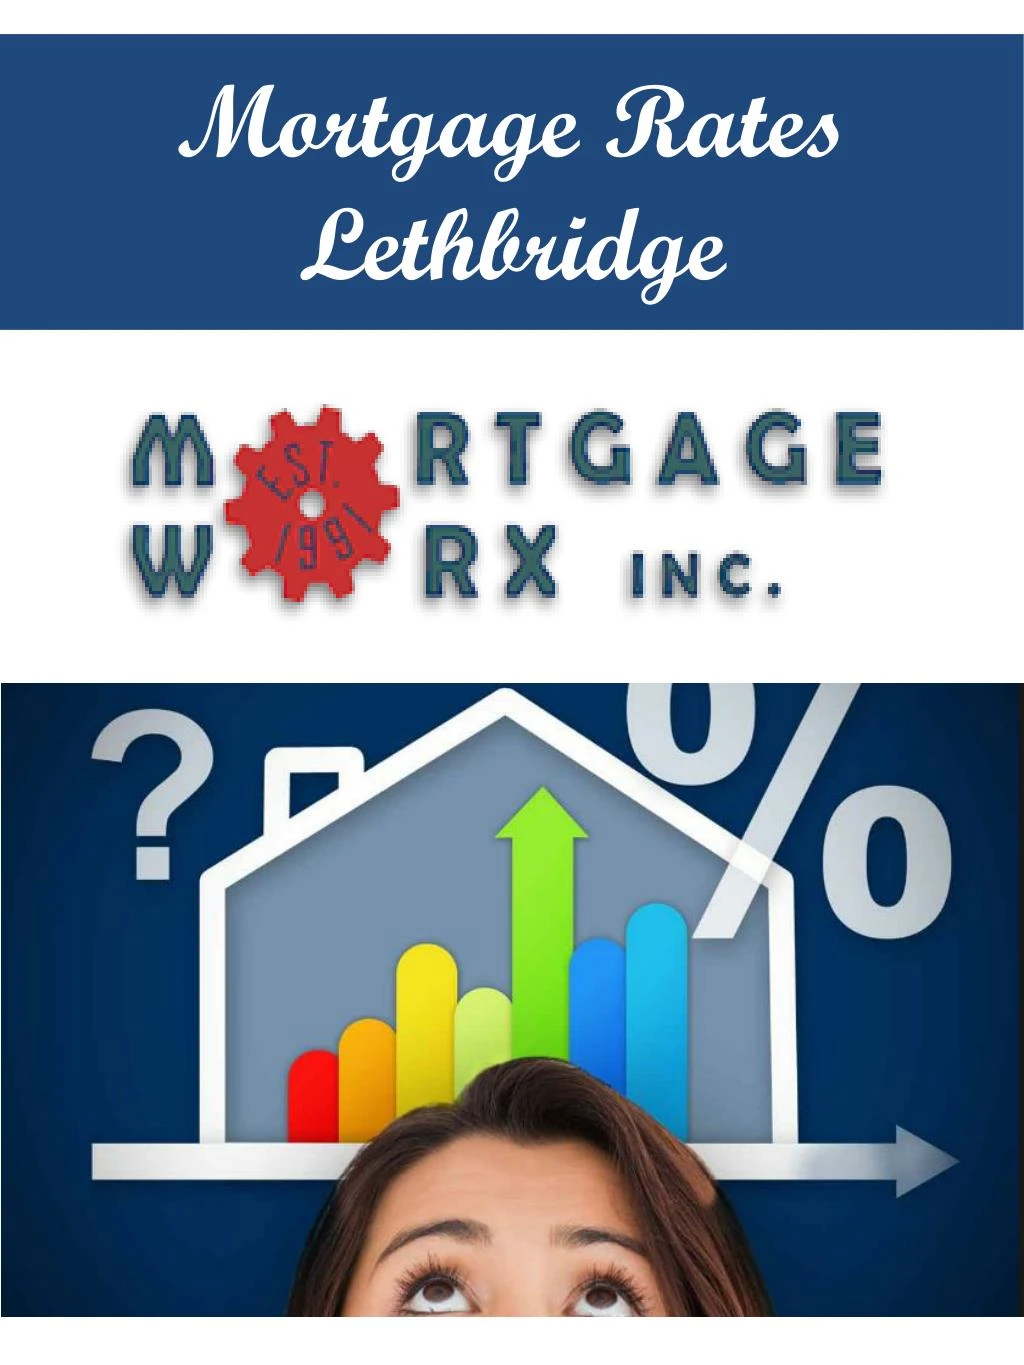 mortgage rates lethbridge